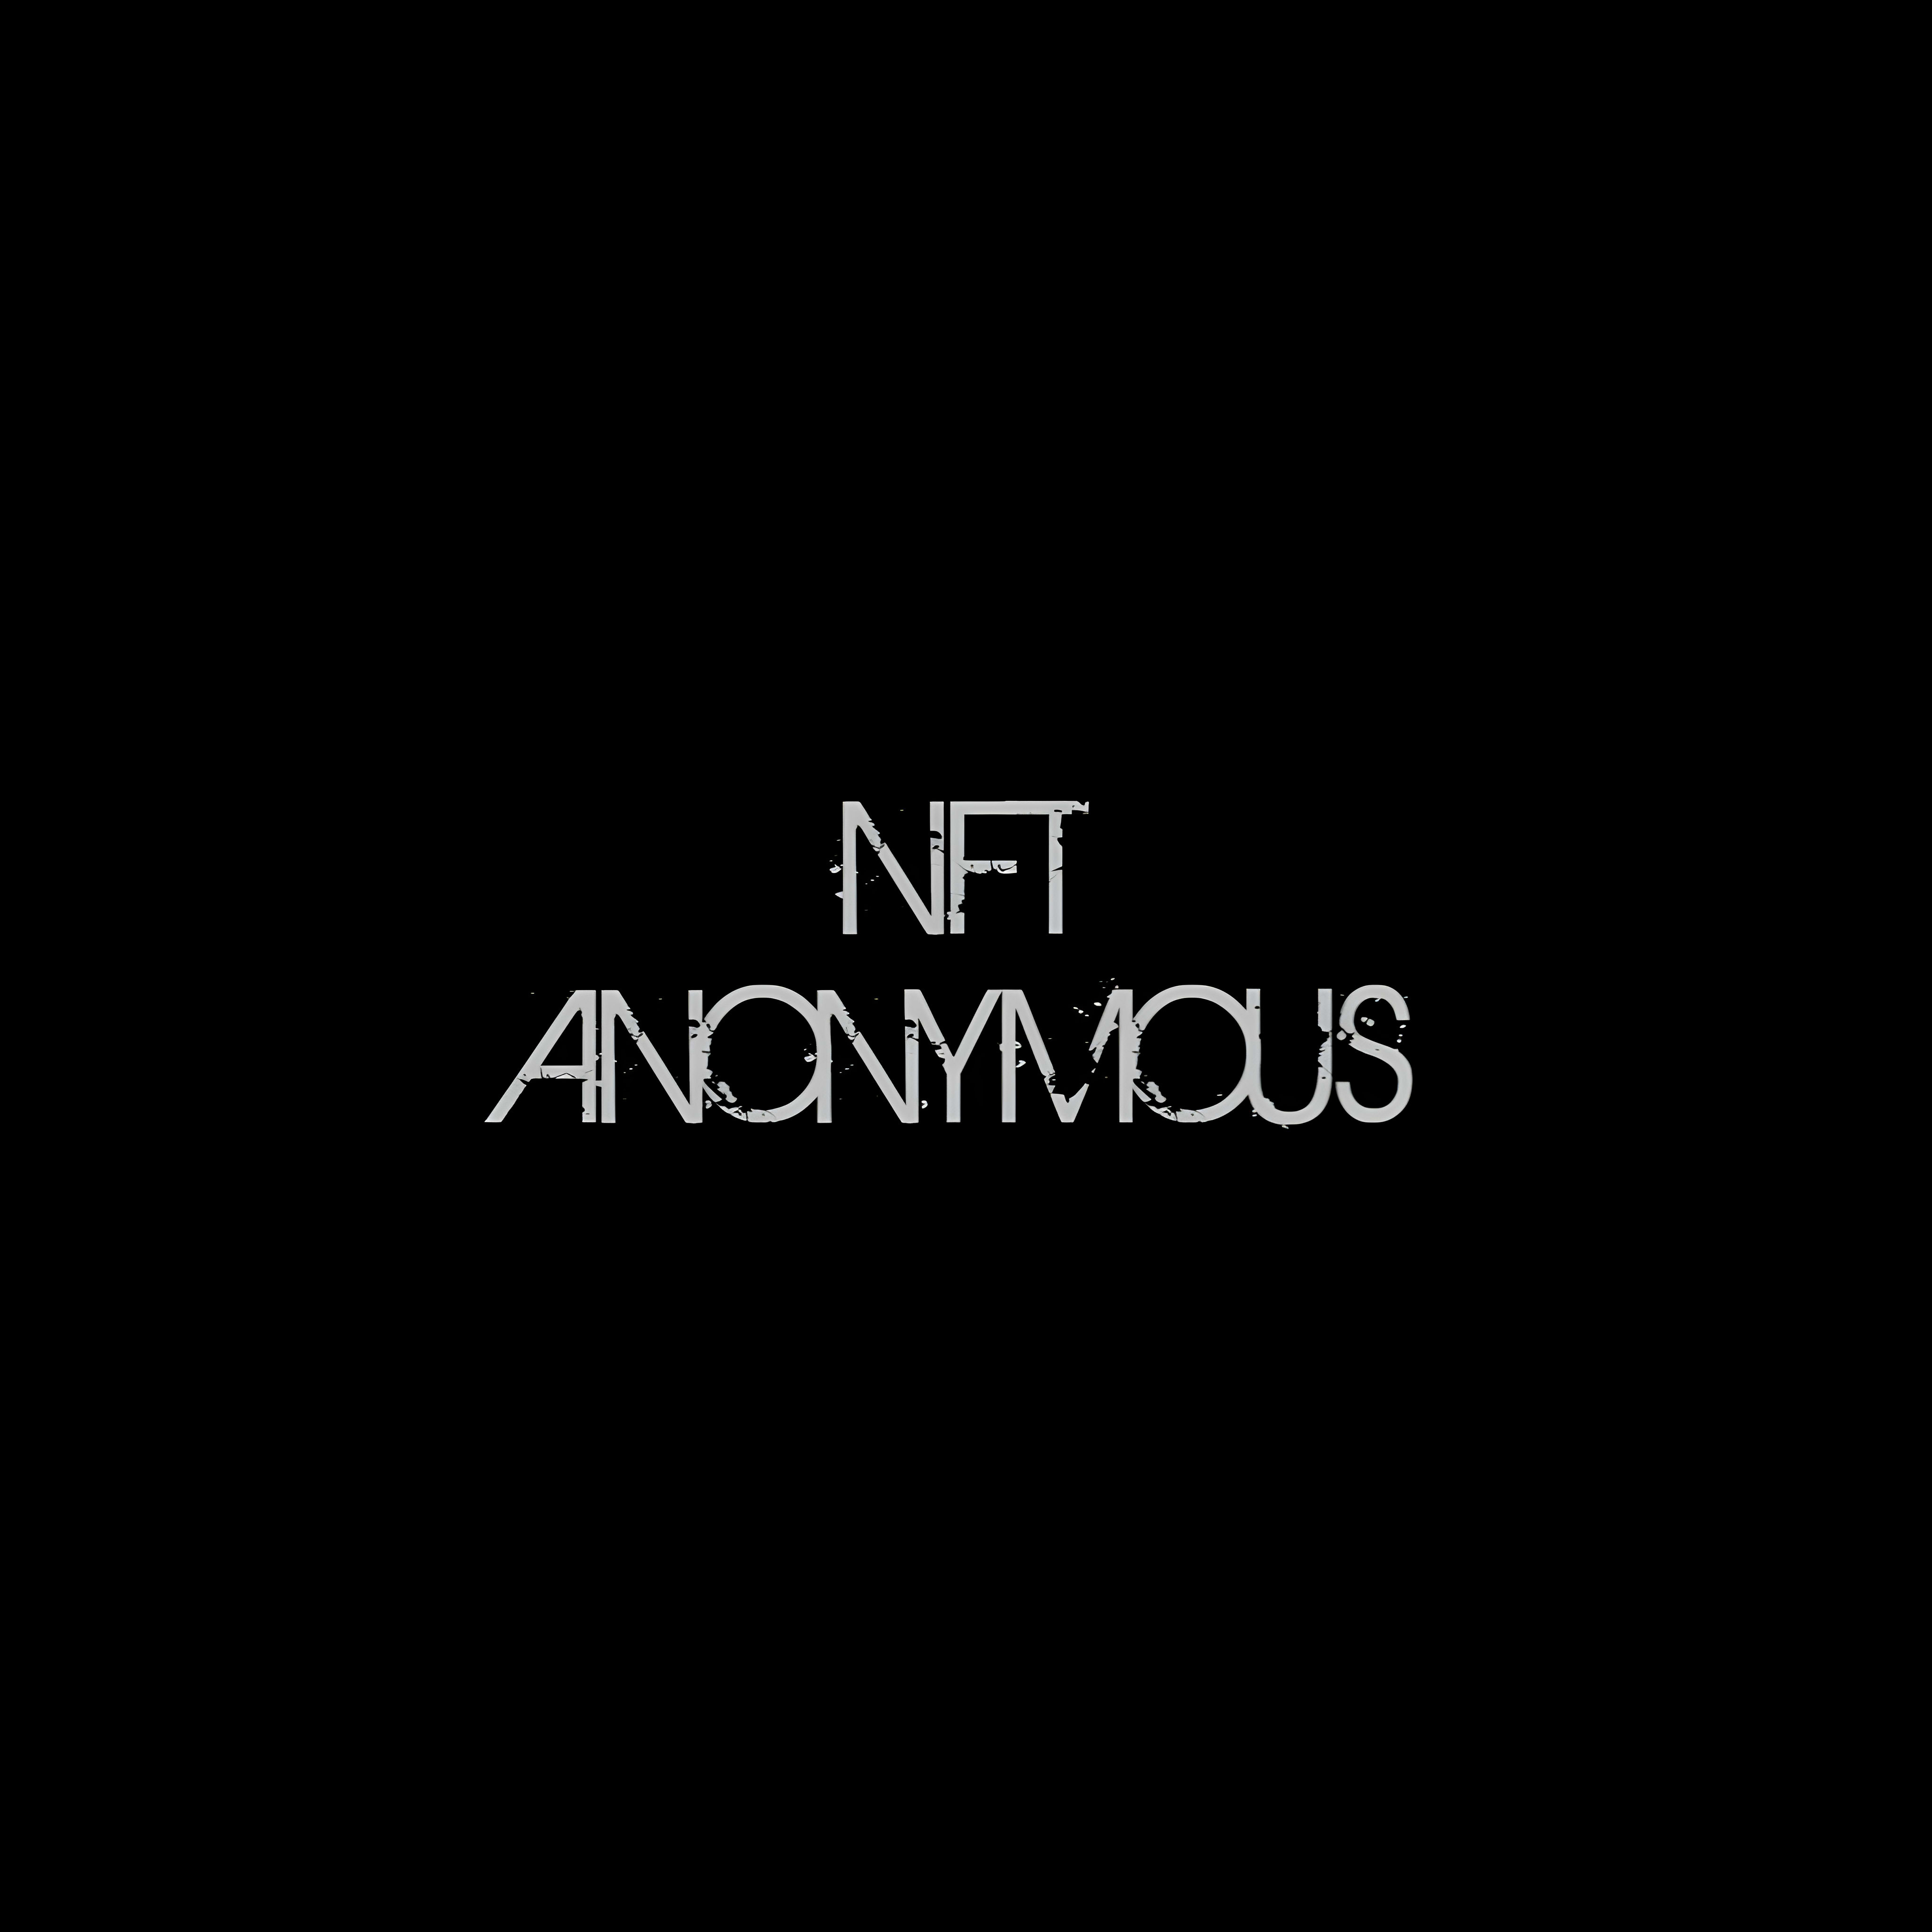 NFT Anonymous